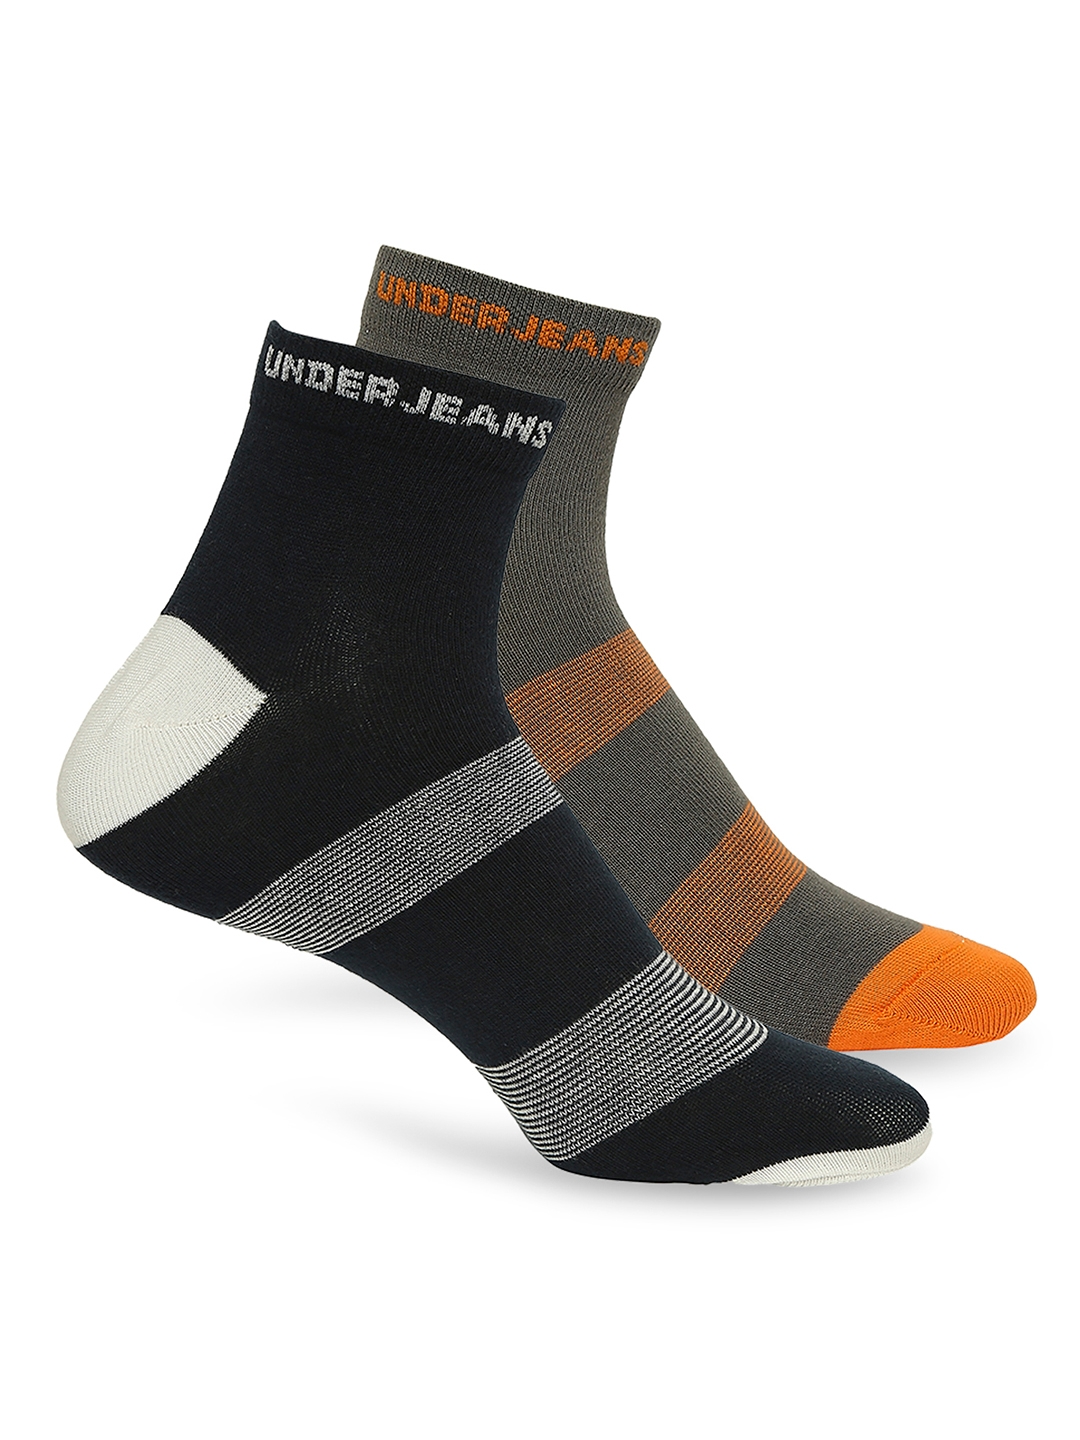 Underjeans by Spykar Premium Dark Grey & Navy Ankle Length Socks - Pack Of 2